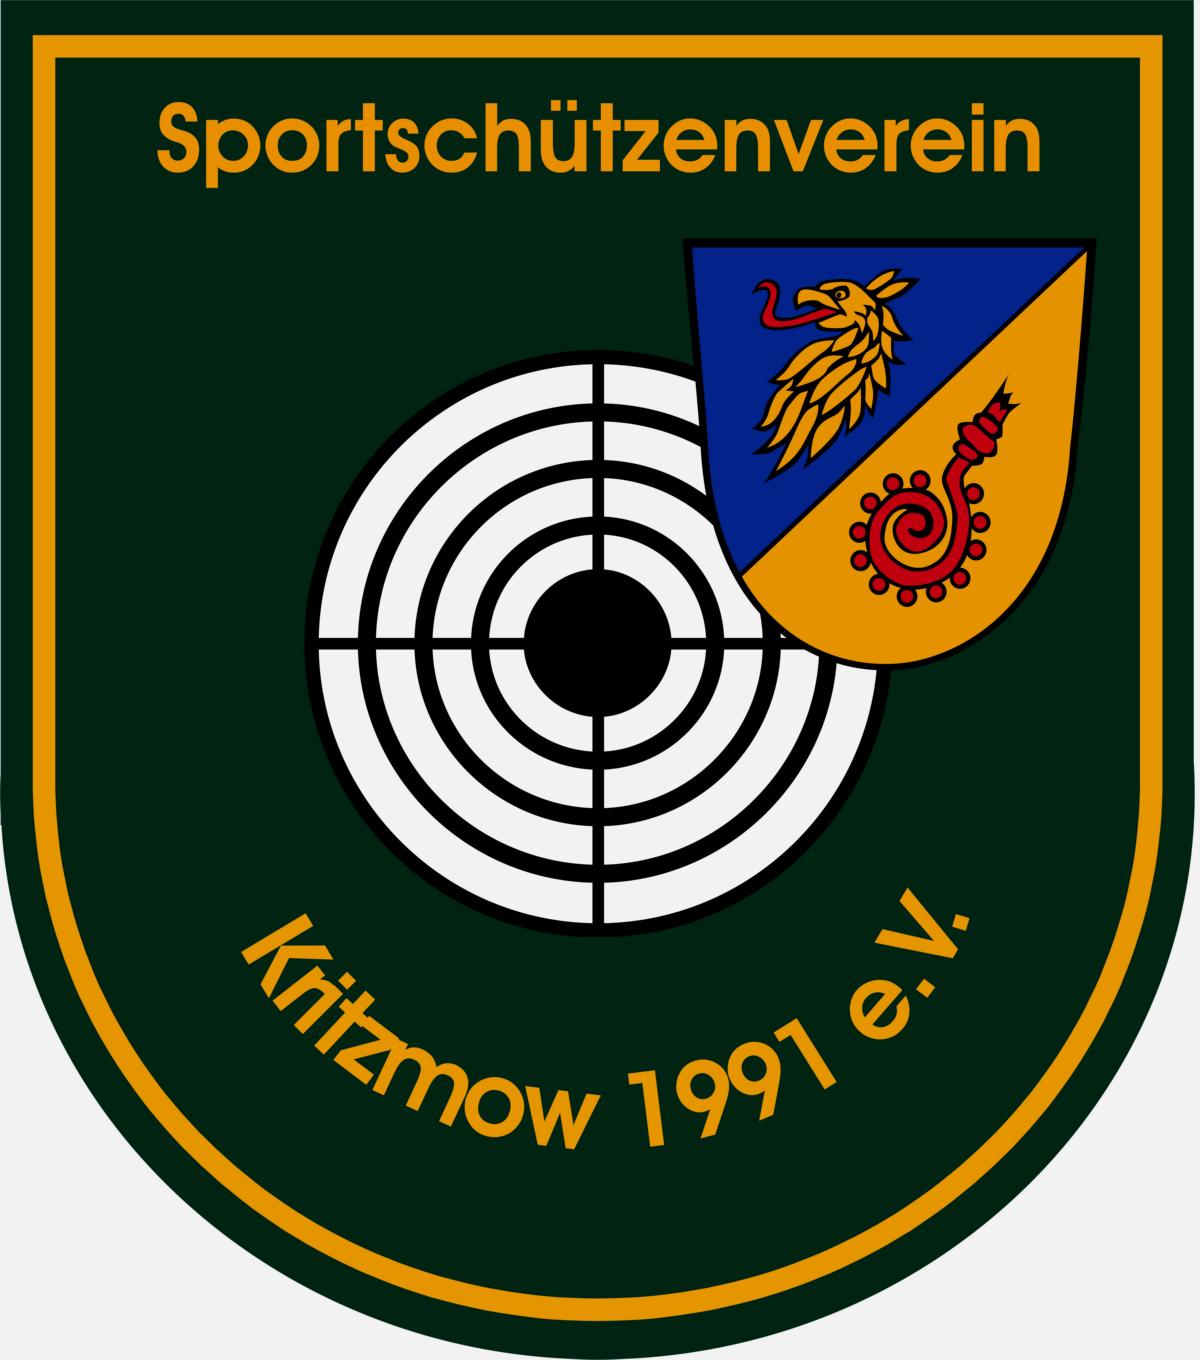 SSVK Kritzmow 1991 e.V.